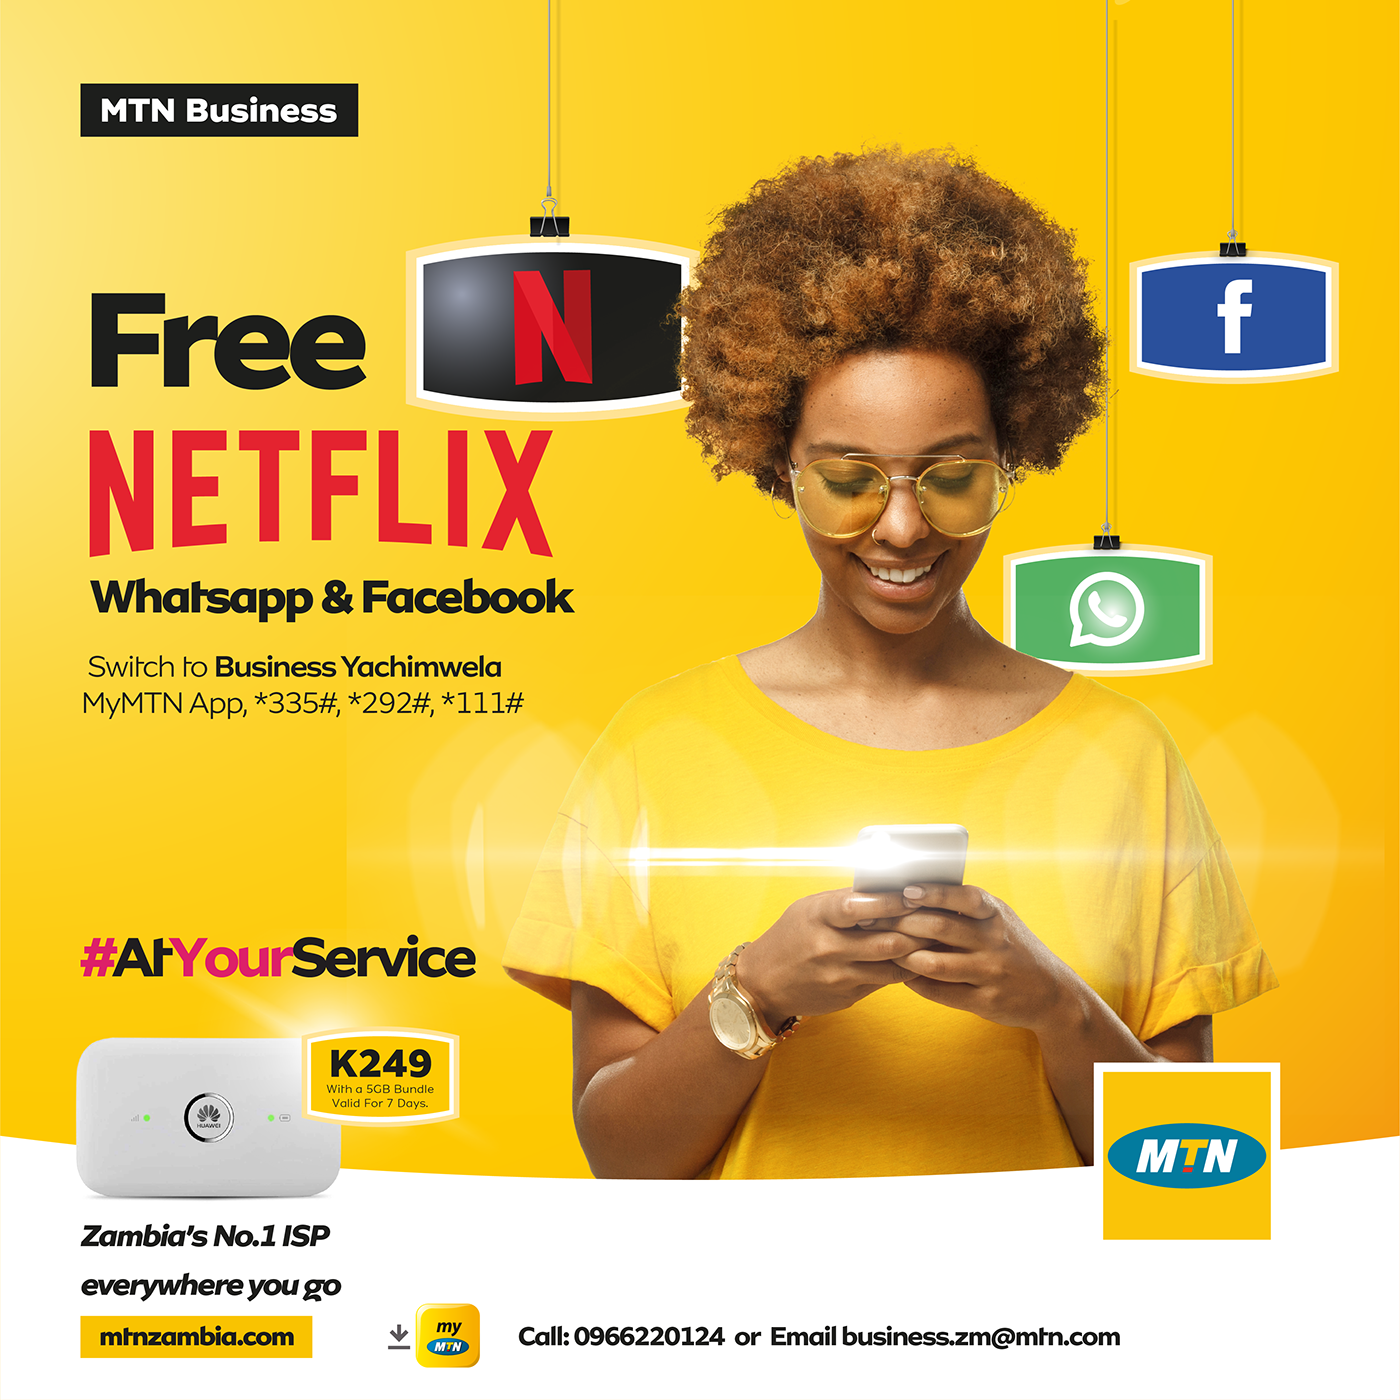 Netflix Free Netflix social media creative poster Zambia MTN business mtn